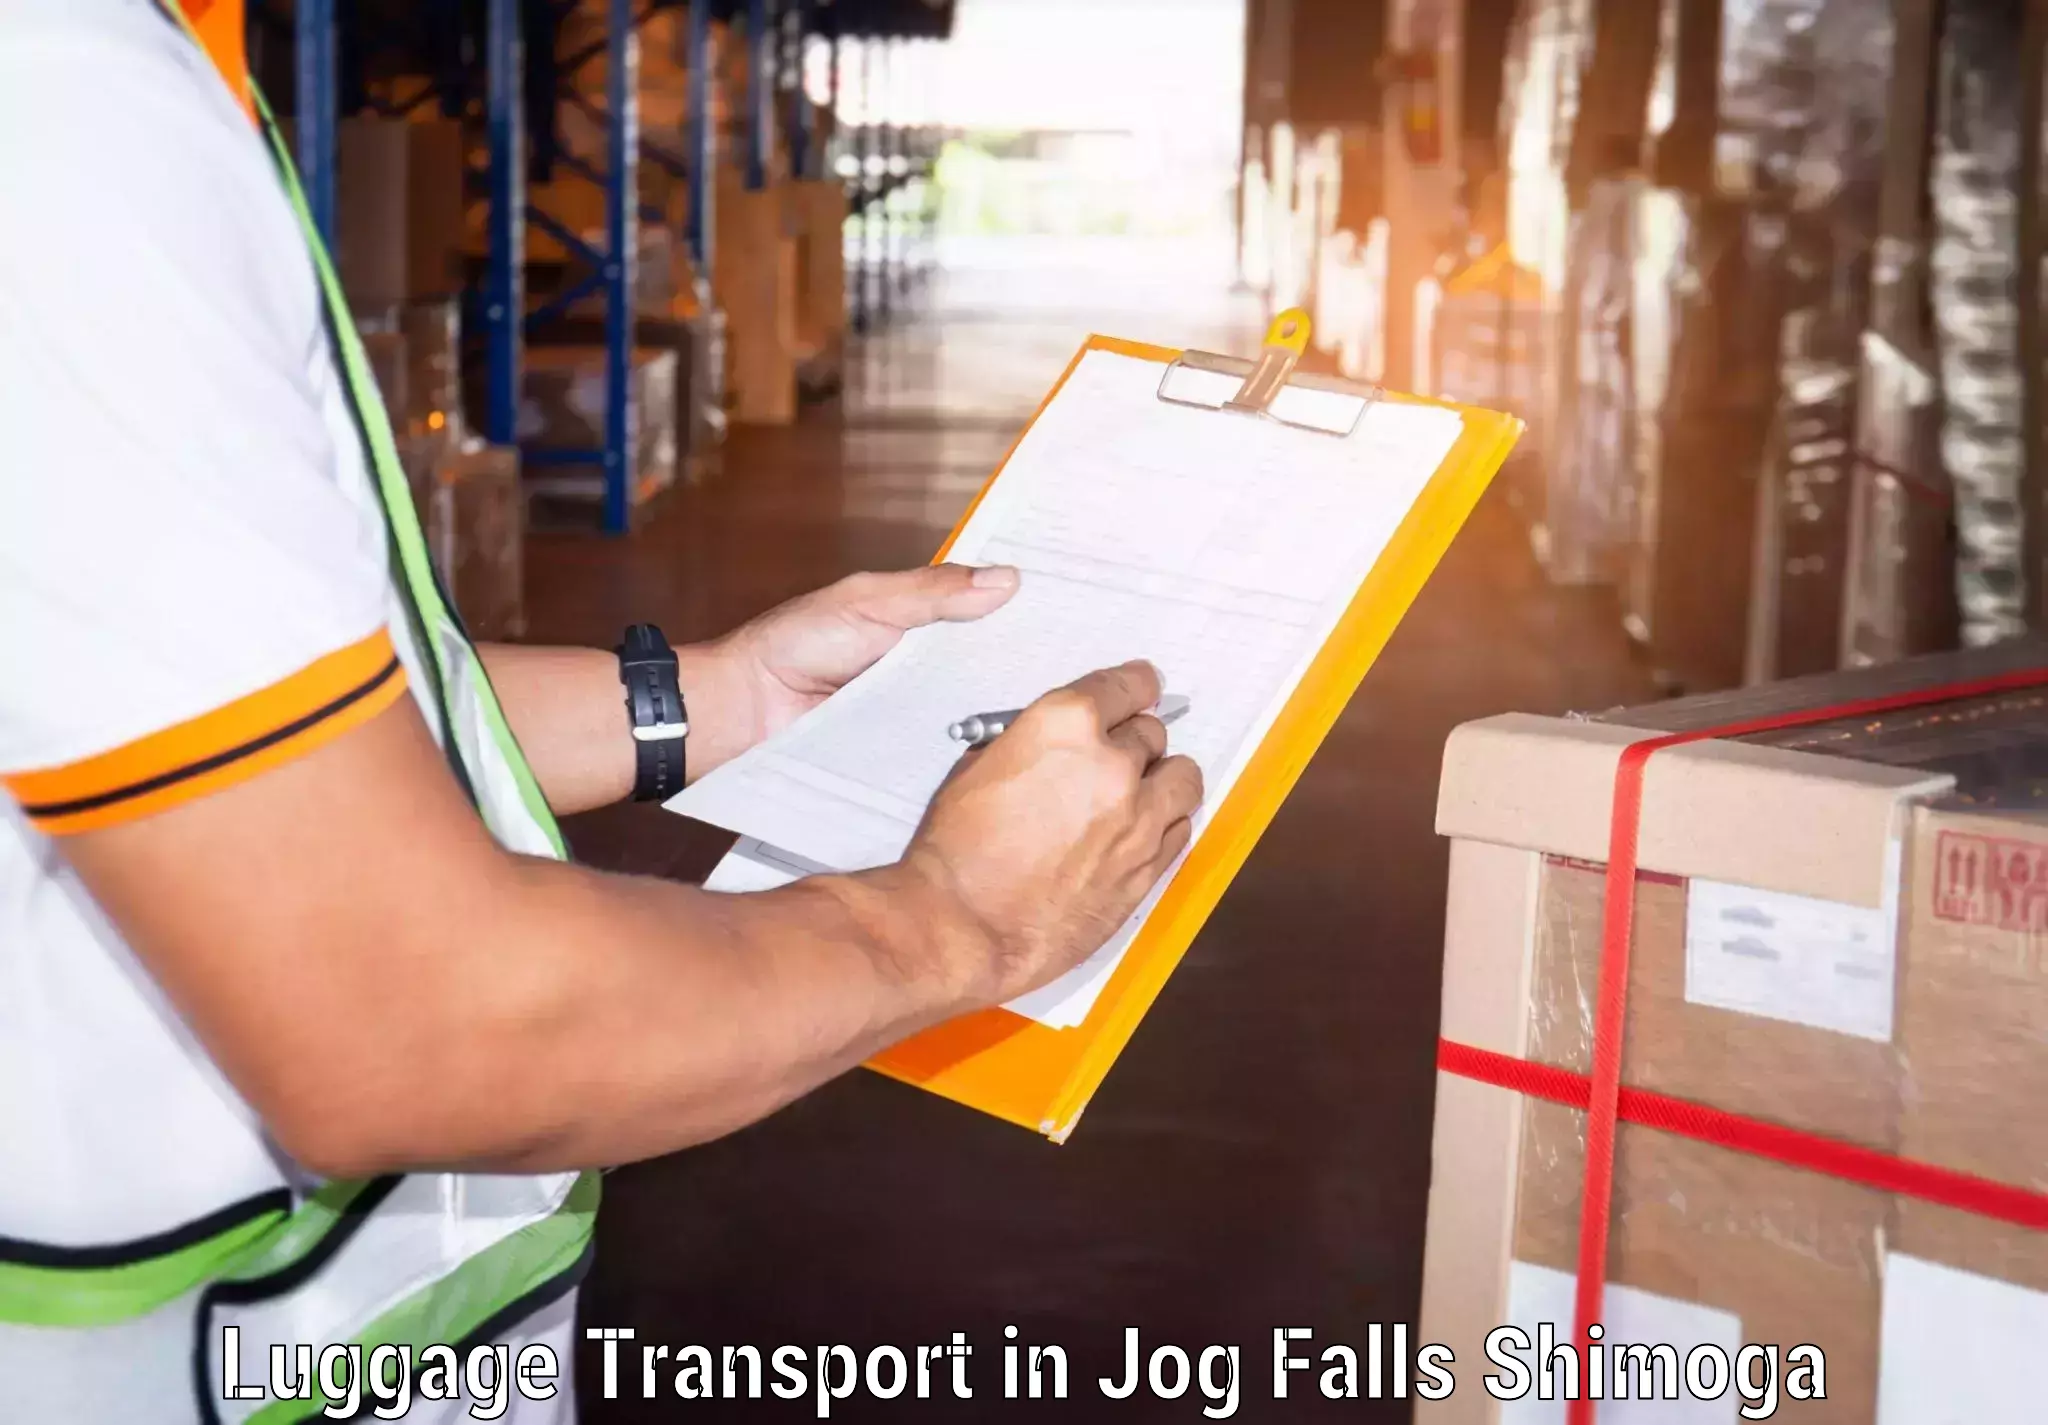 Professional baggage transport in Jog Falls Shimoga